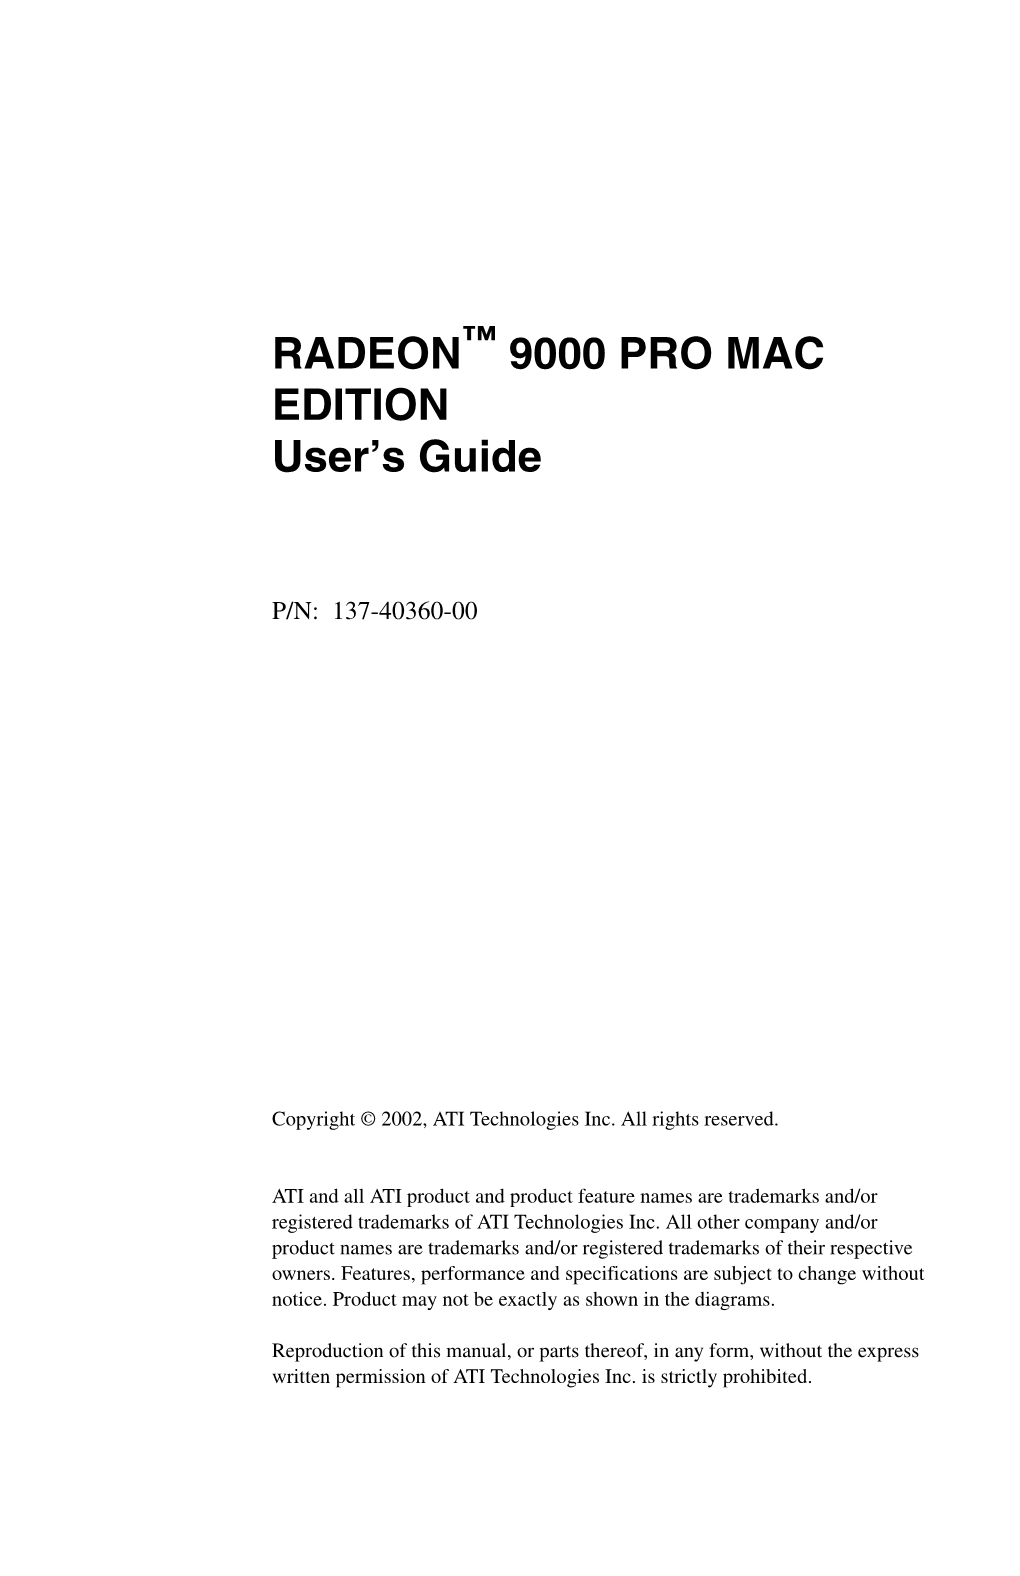 RADEON 9000 PRO MAC EDITION User's Guide